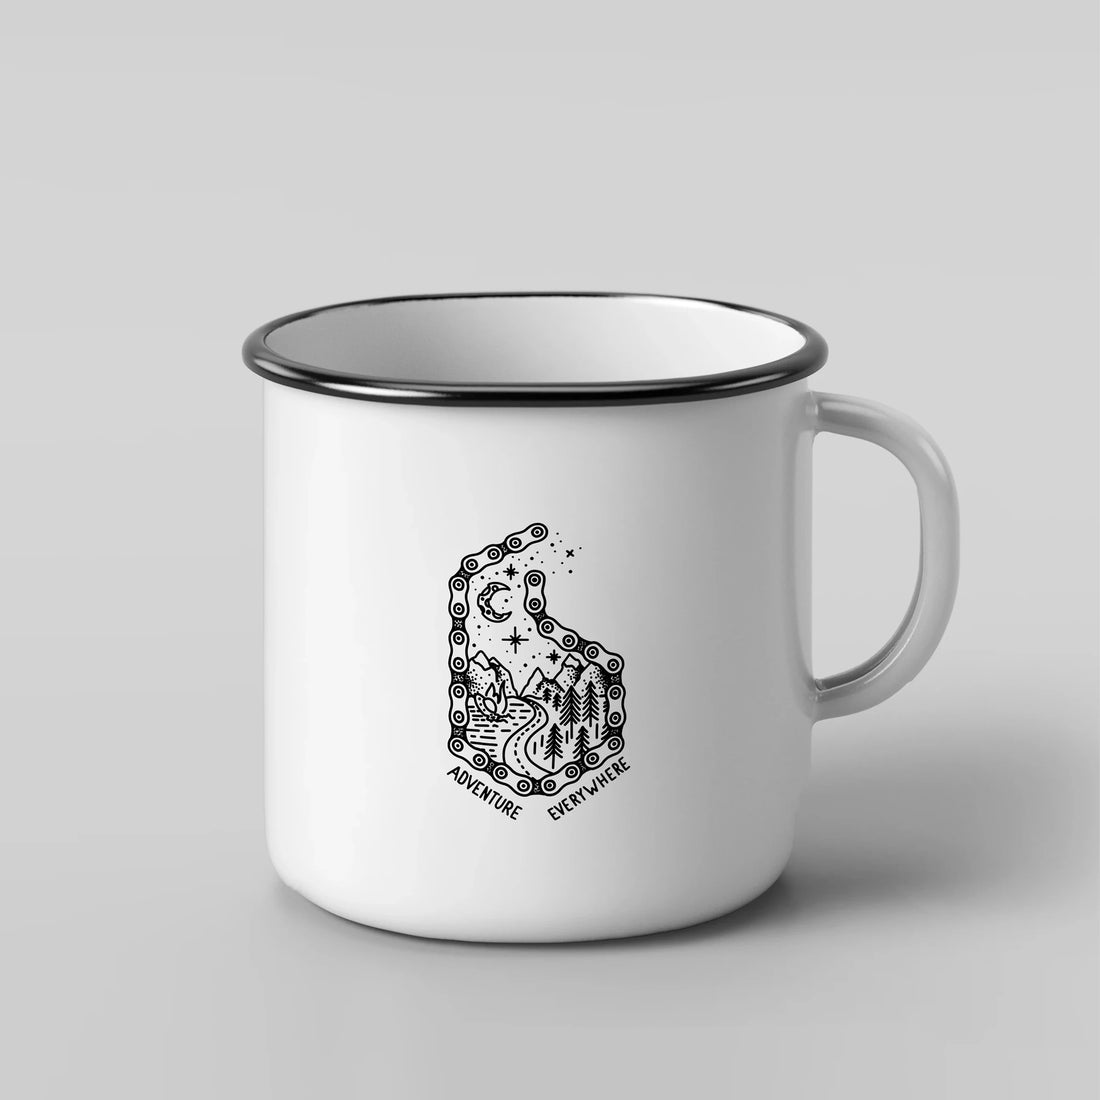 Beeline white enamel mug with adventure everywhere motif